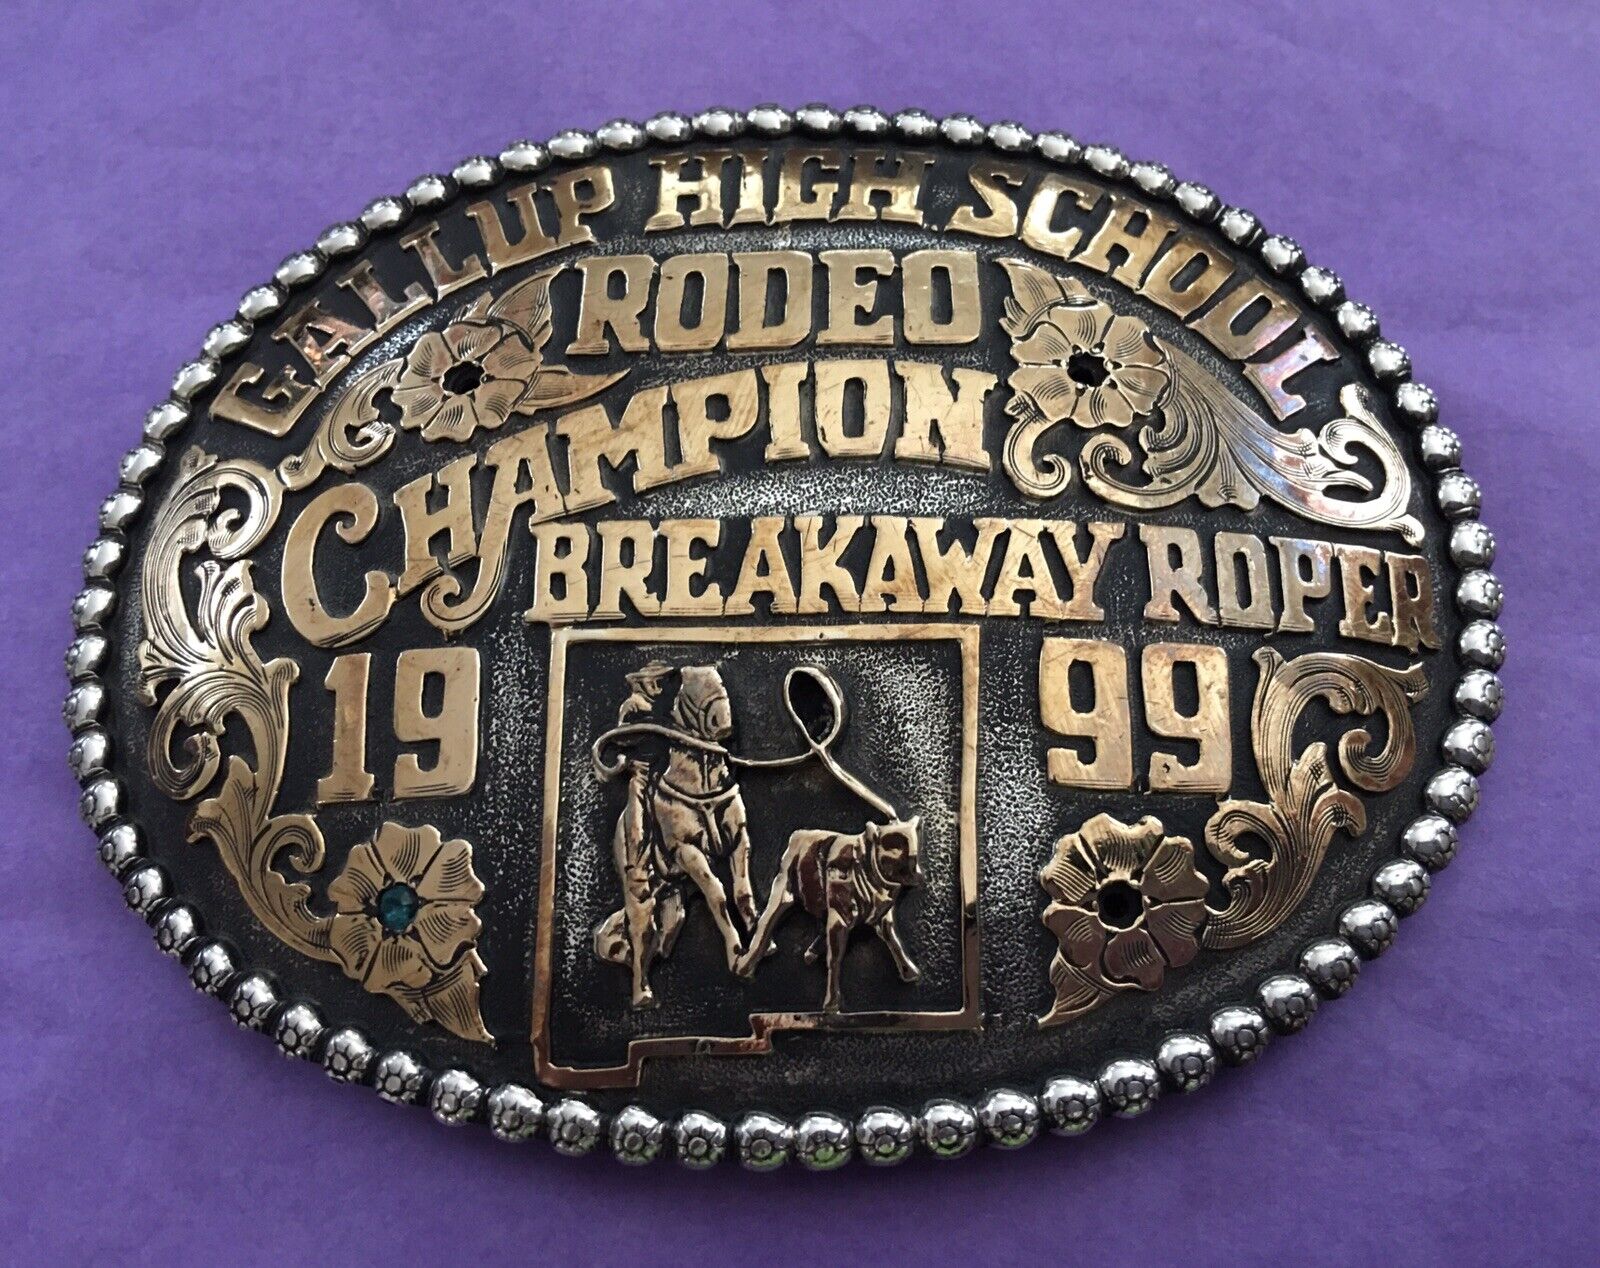 VTG 1999 Gallup NM HS Rodeo Champion Breakaway Roper Trophy Concho Belt Buckle